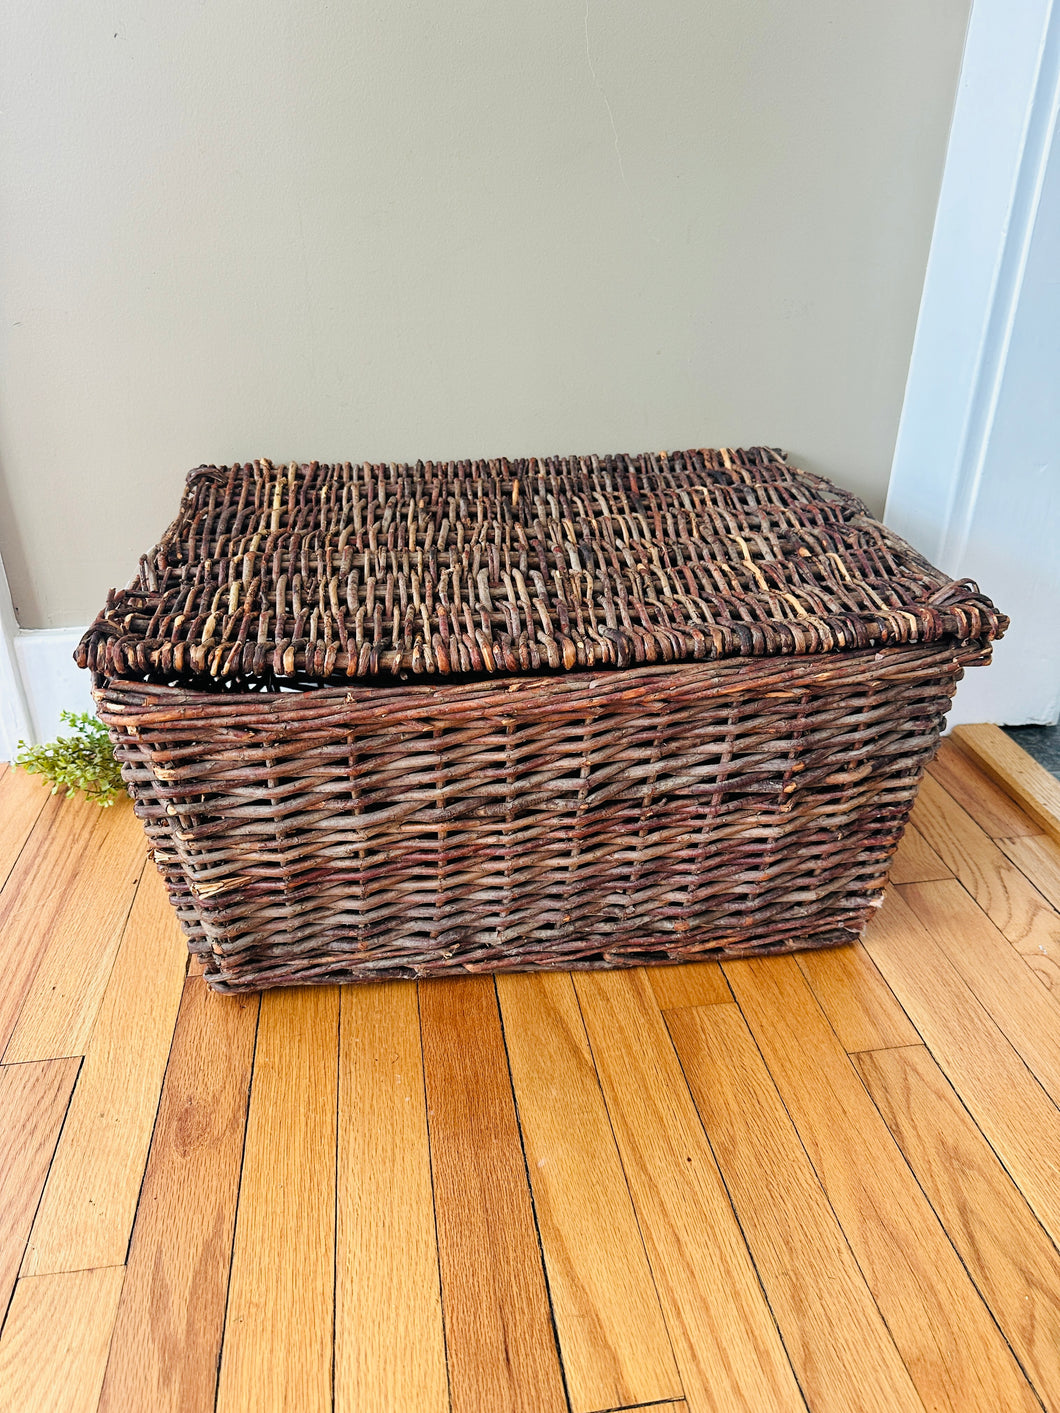 Rectangular Cottage Basket with Lid- Large